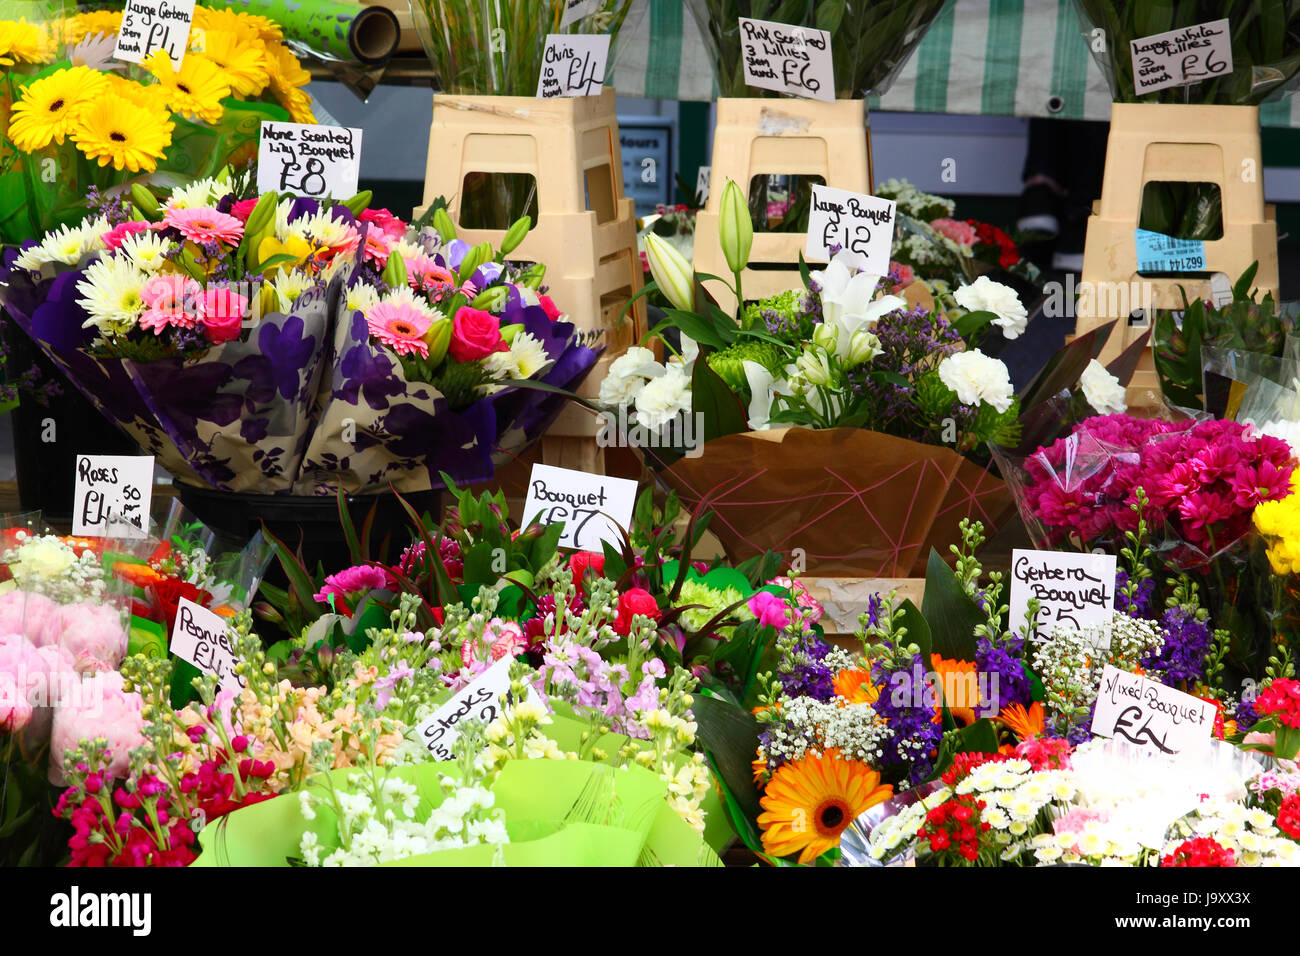 Giorno di mercato a Wetherby vicino a Leeds, Yorkshire. Foto Stock